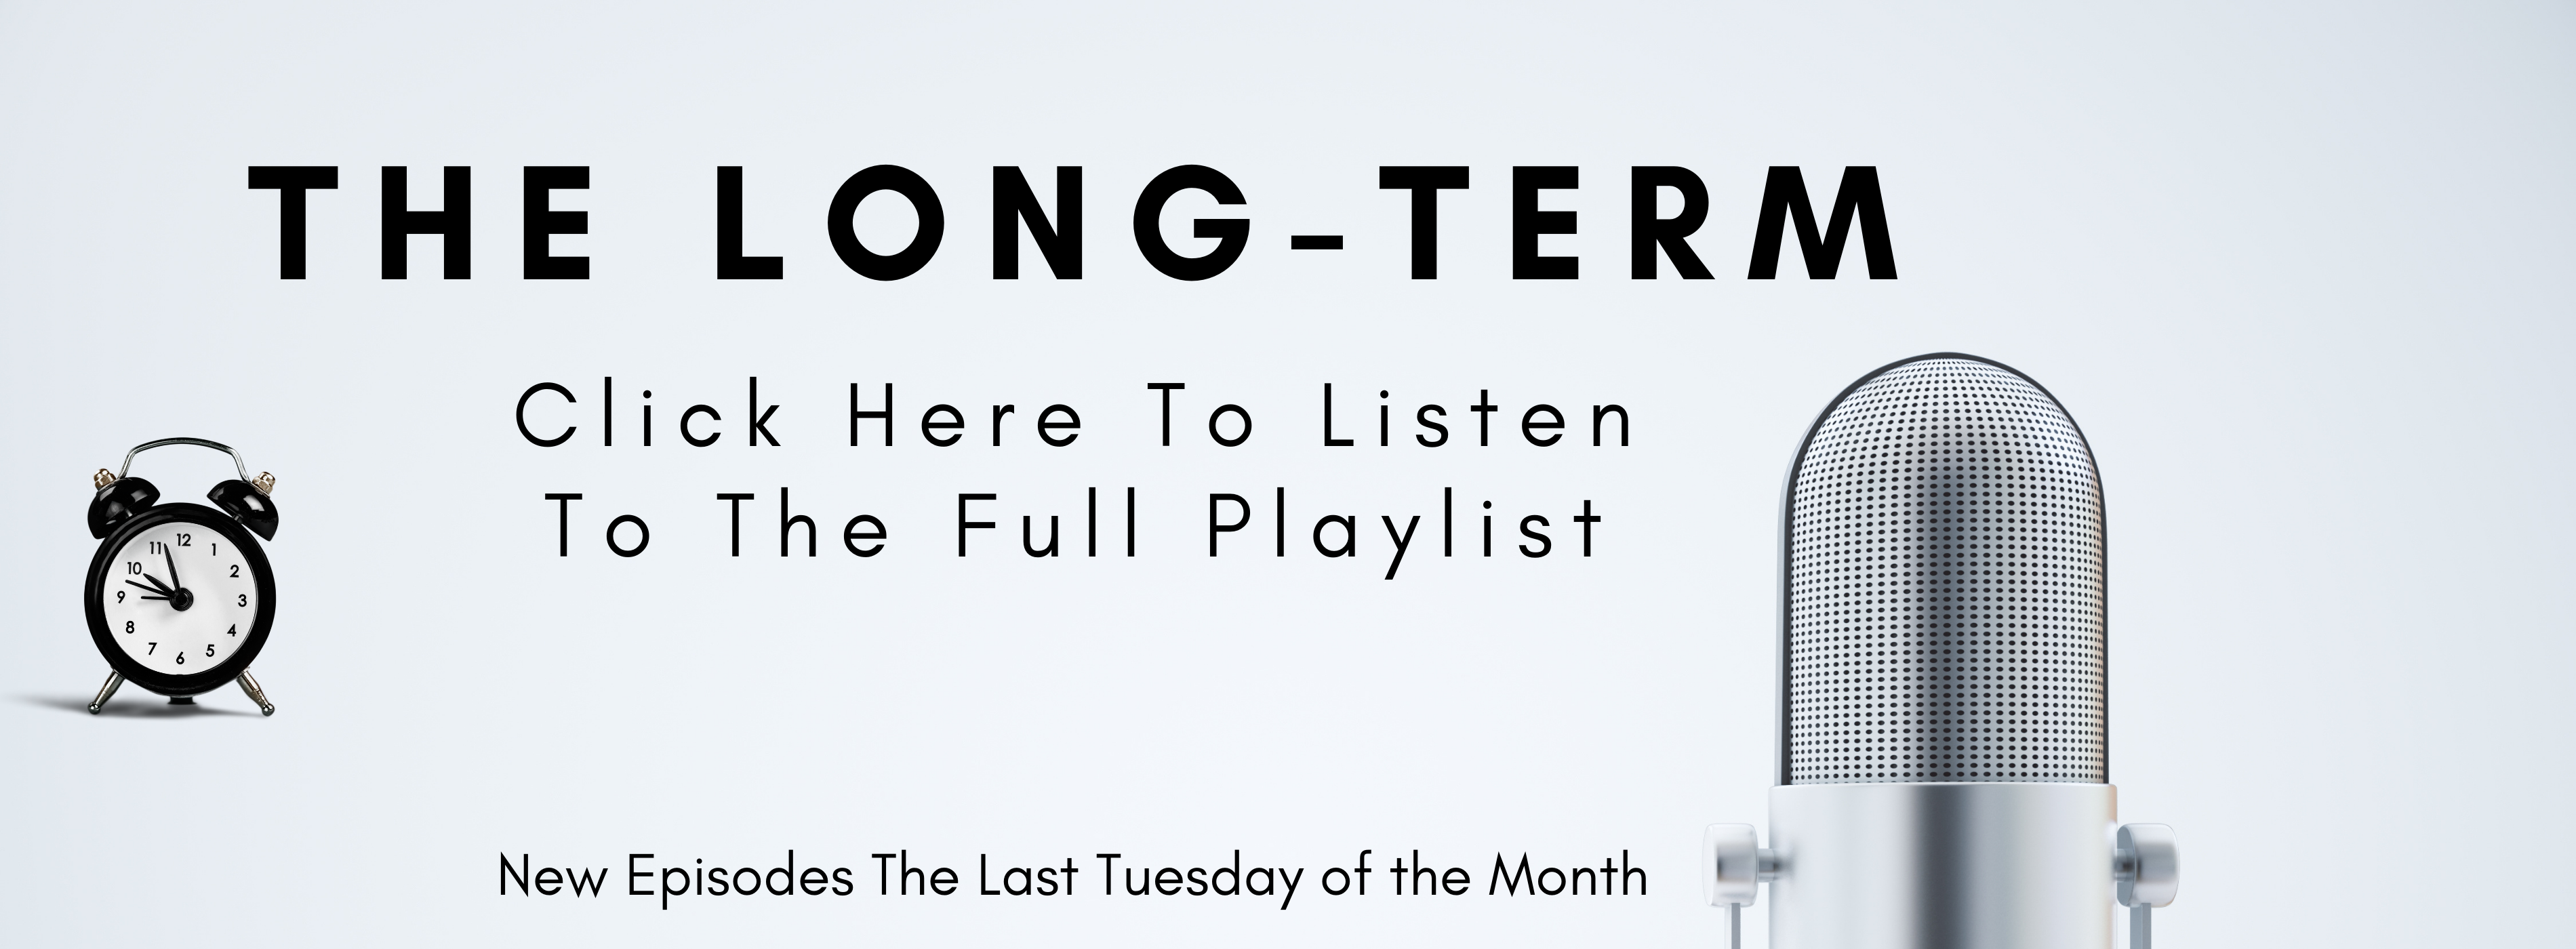 The Long Term - Playlist